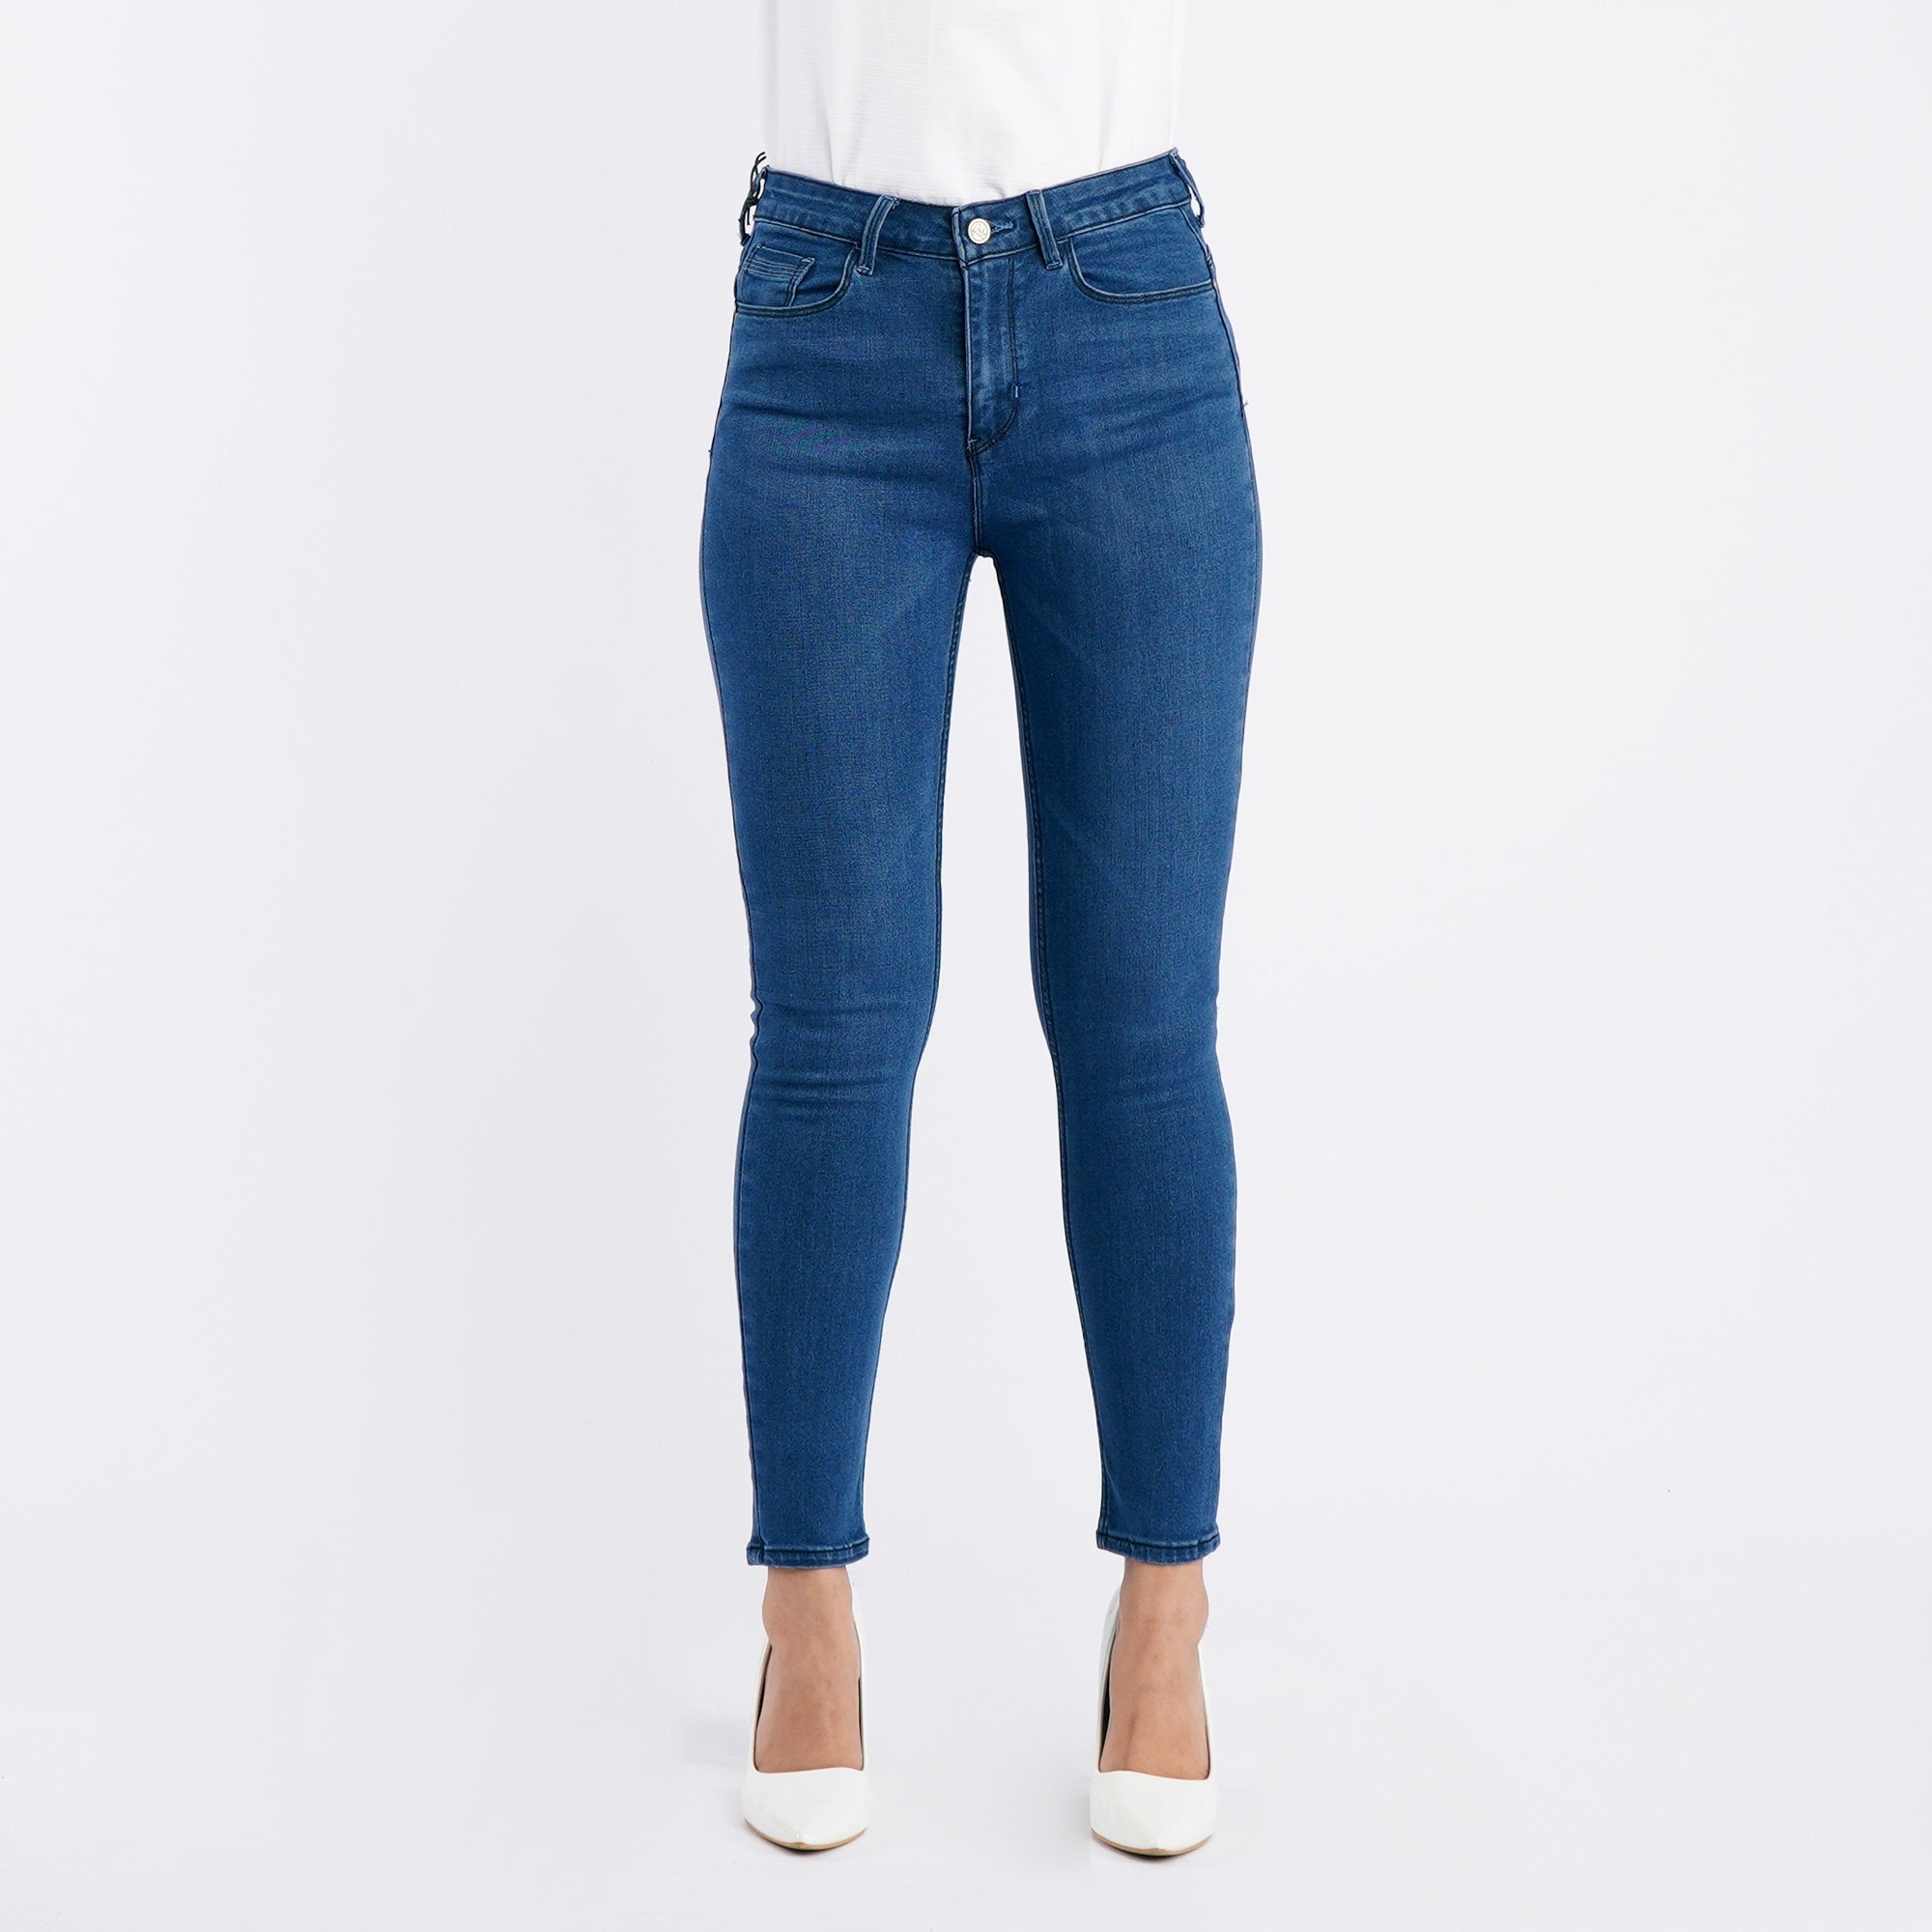 RRJ Ladies Basic Denim Stretchable Hi Waist Pants Super skinny fitting –  Rough Rider Jeans